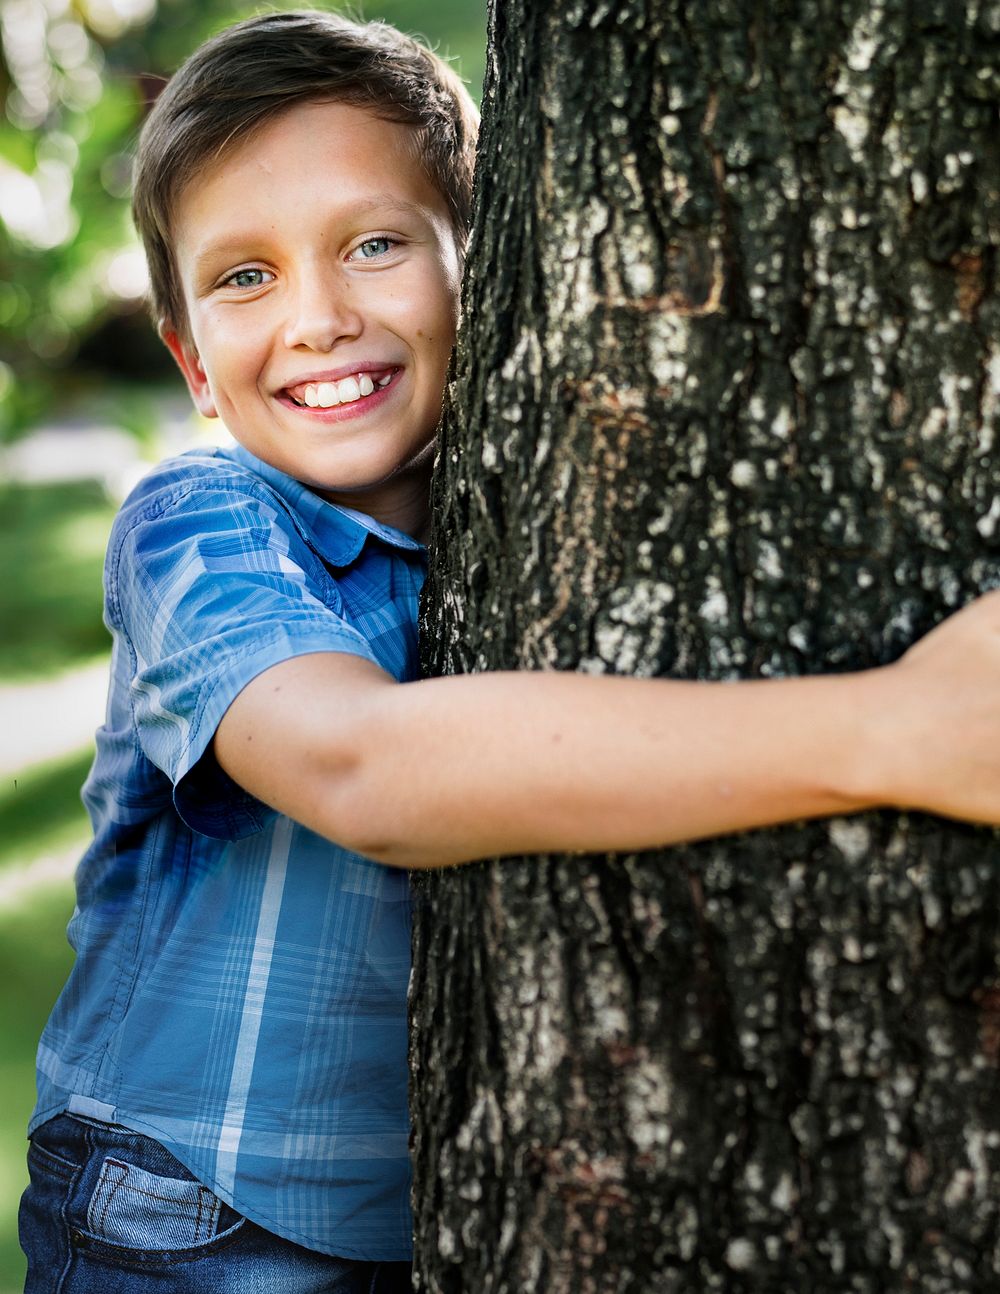 Cheerful boy hugging tree to save environment